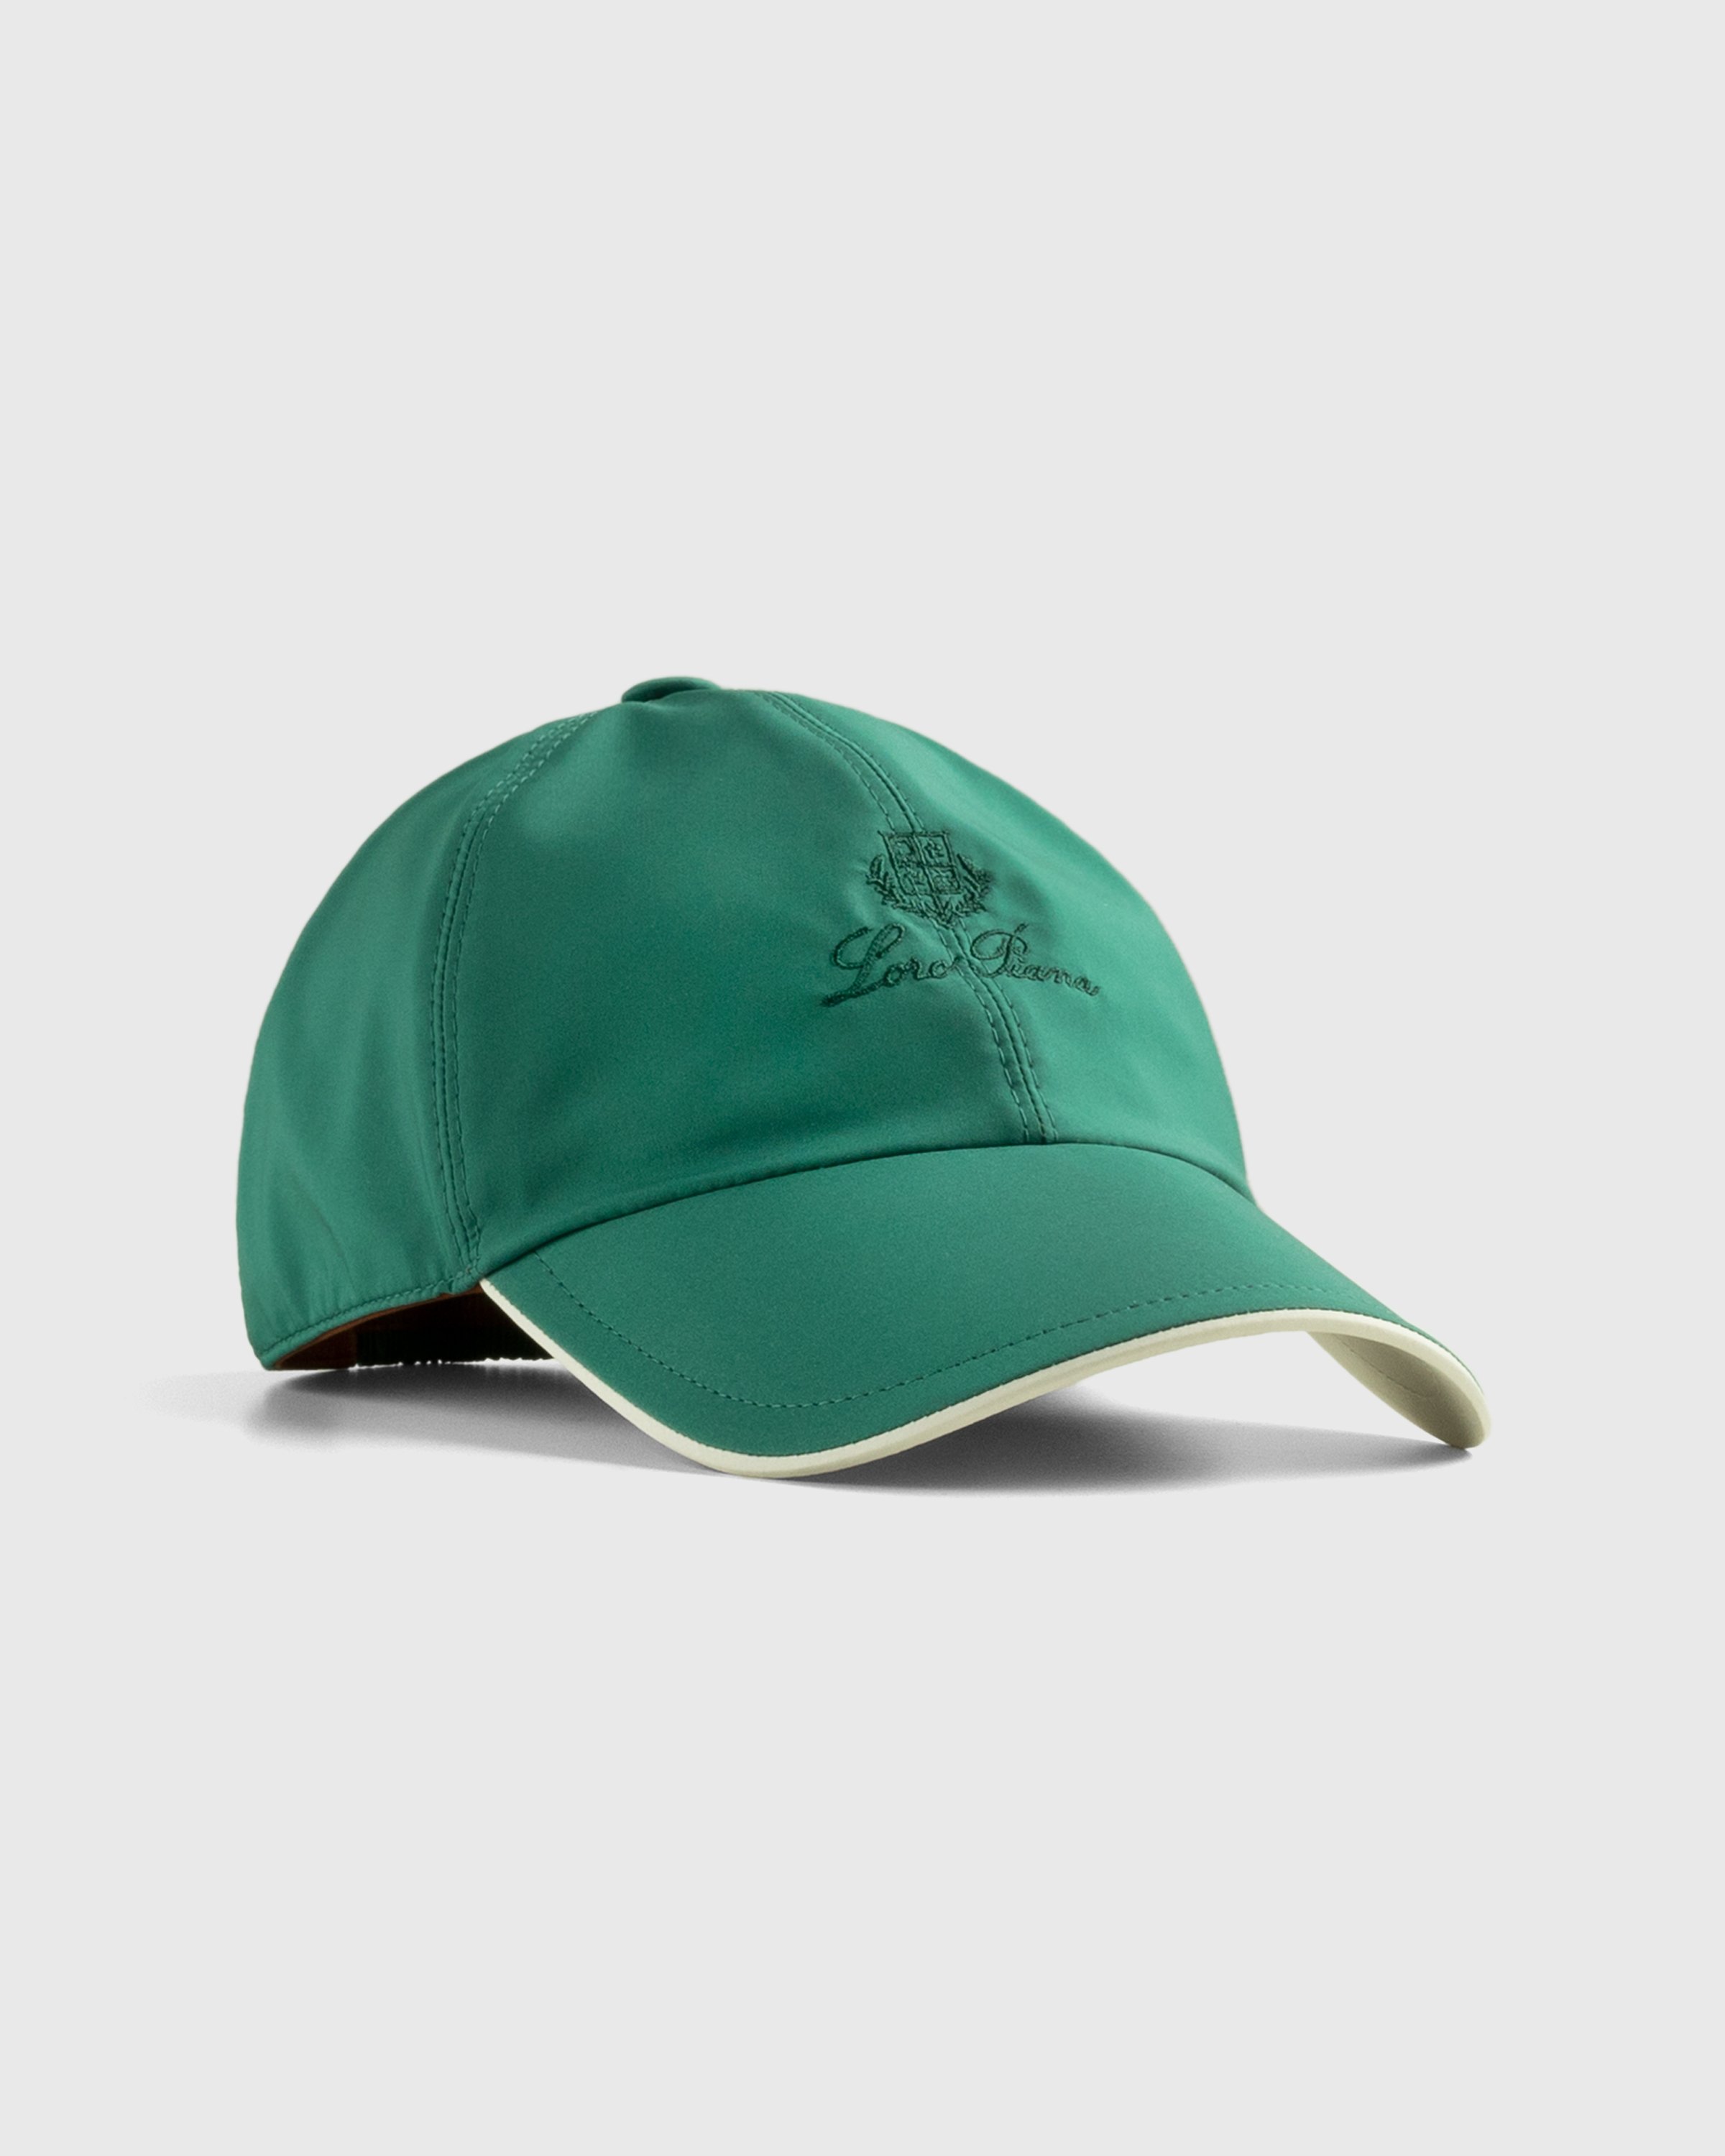 Loro Piana - Bicolor Baseball Cap Green Mint / Ivory - Accessories - Green - Image 1